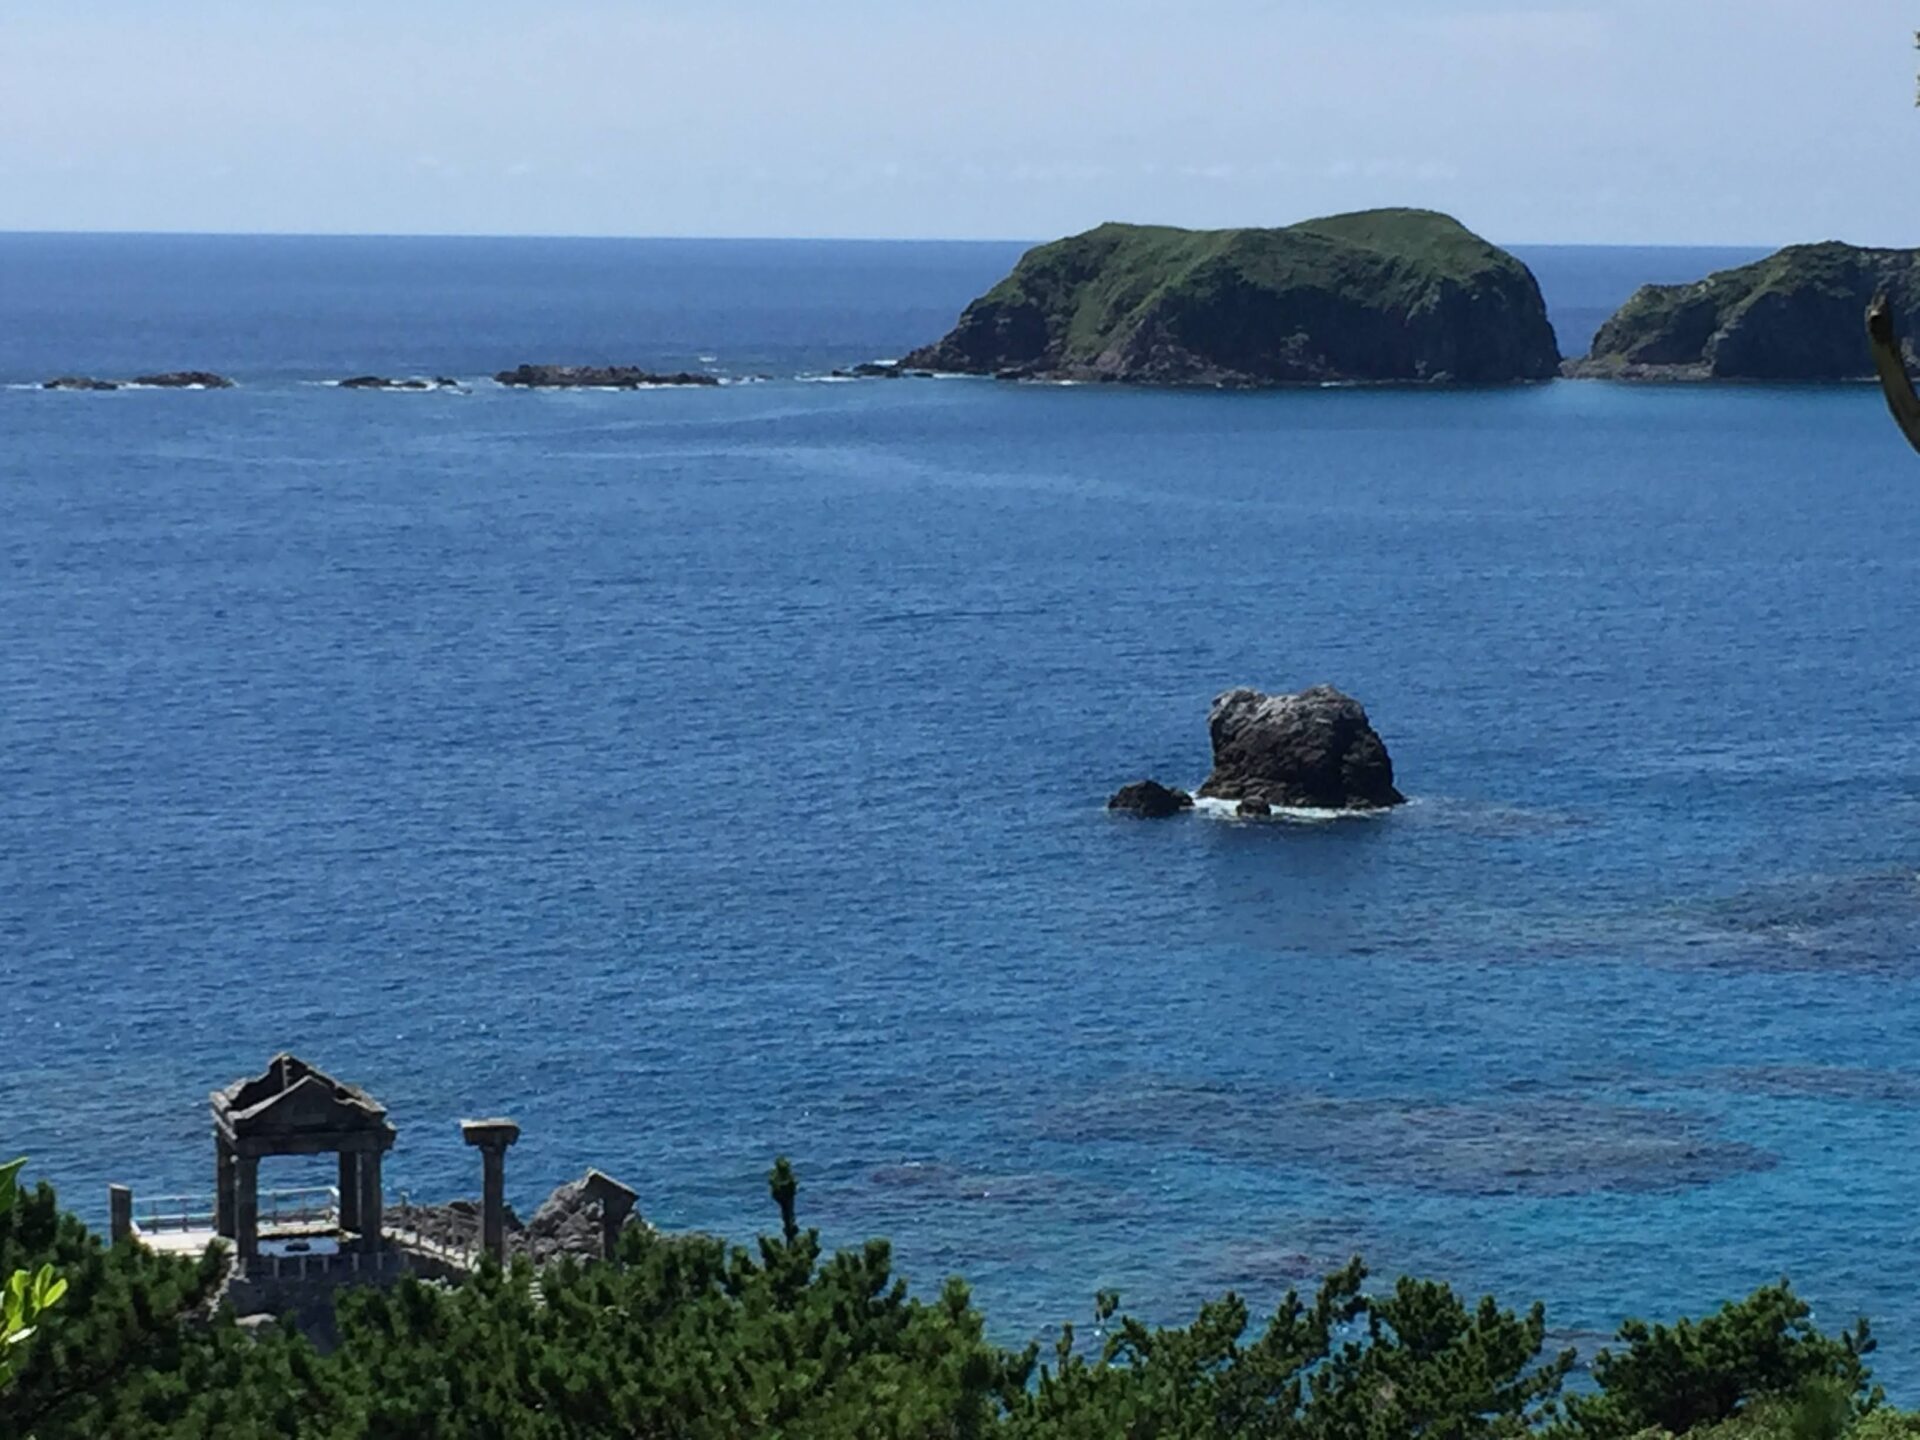 Nijima island